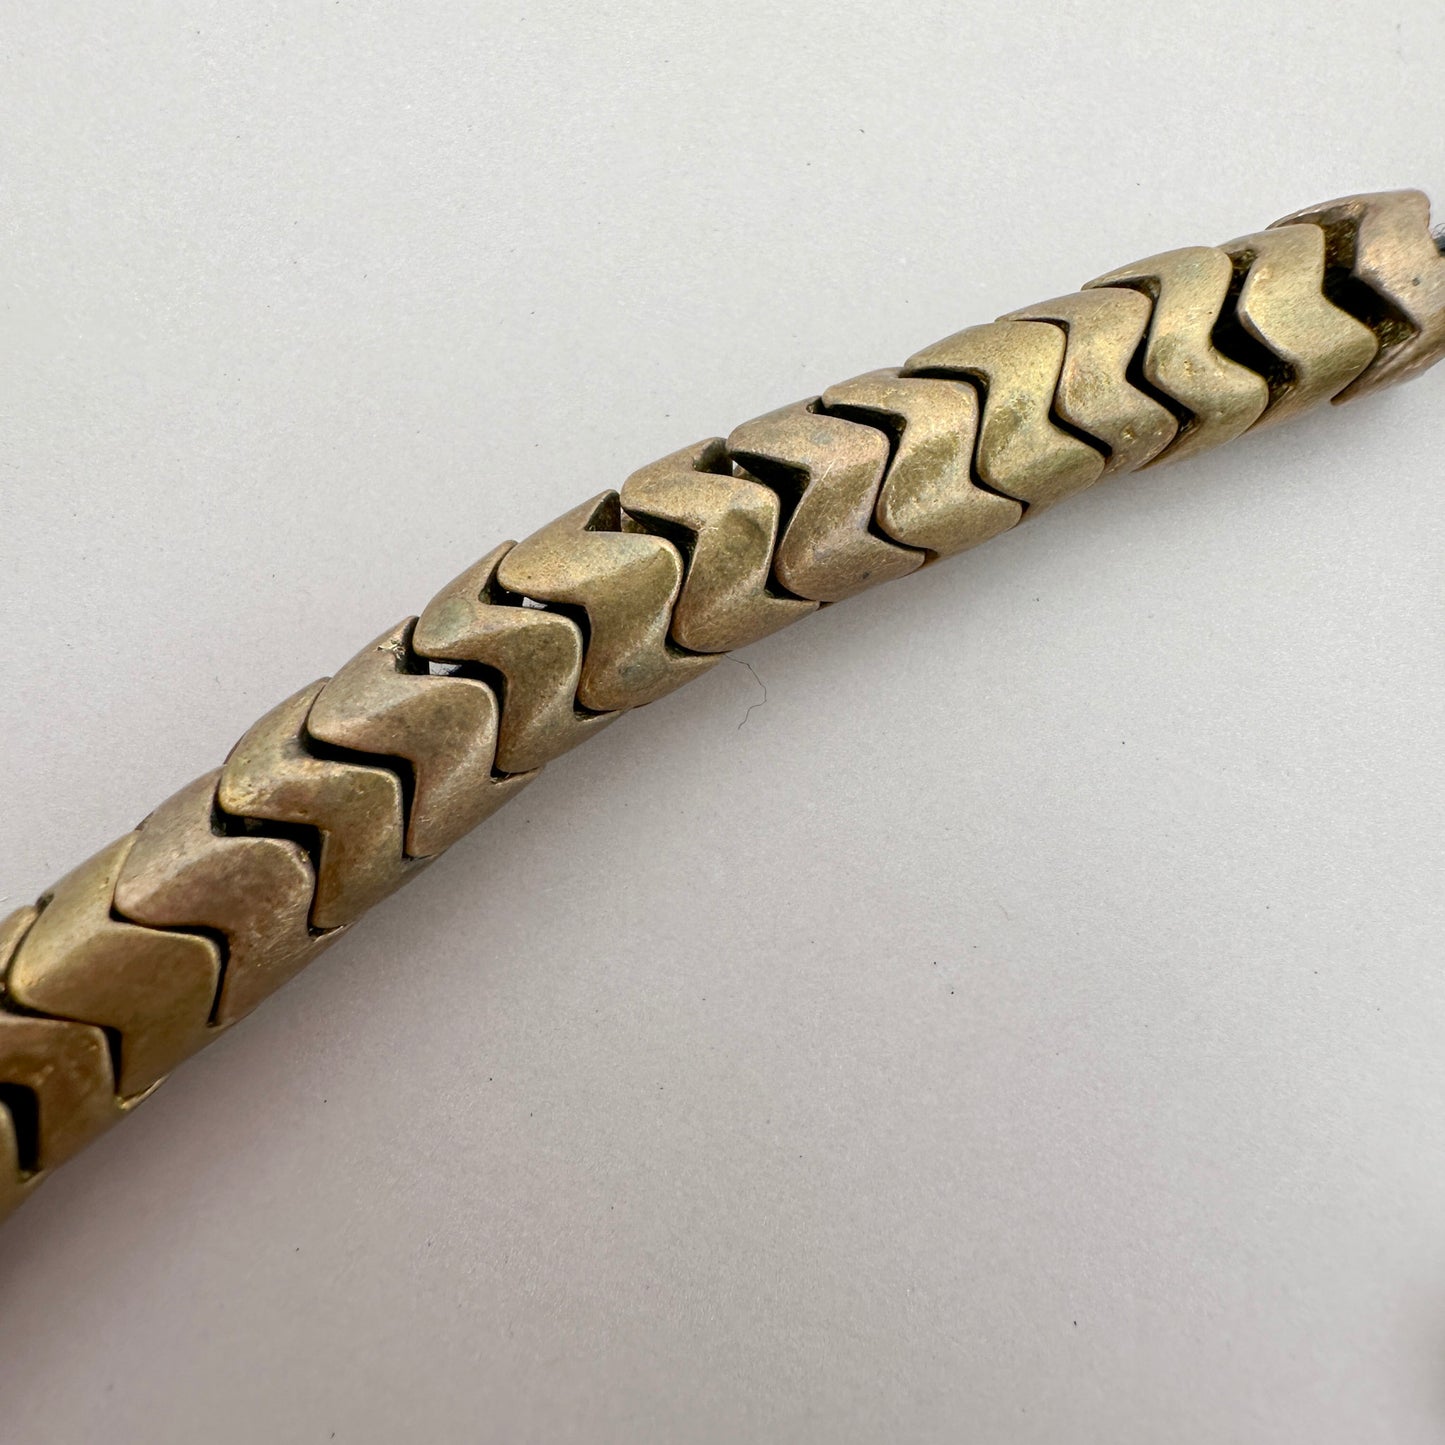 7.5mm "Snake" Rondelle Brass Metal Bead - 10 pcs. (M1917)